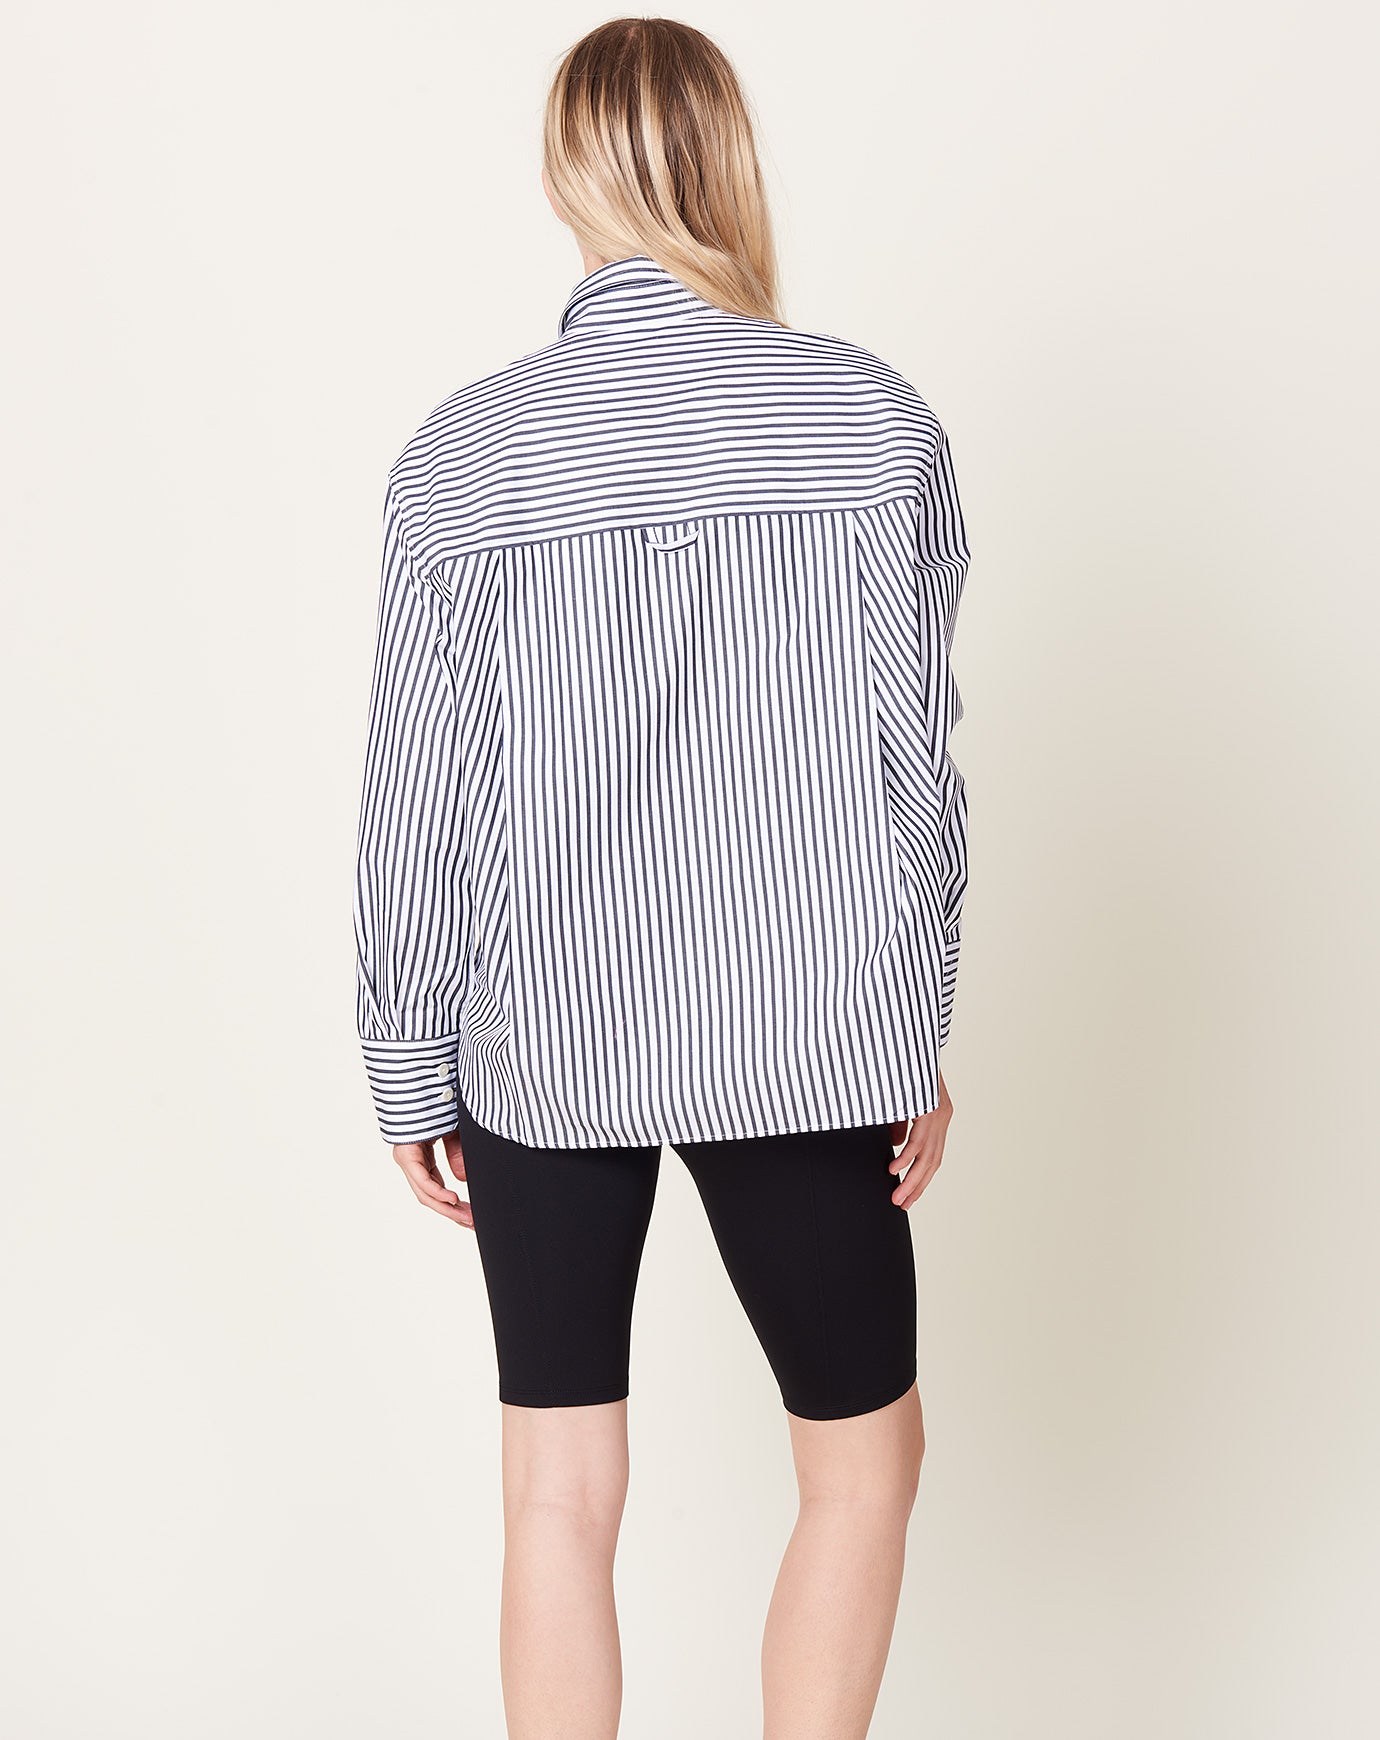 Maria McManus Oversized Shirt in Black & White Stripe